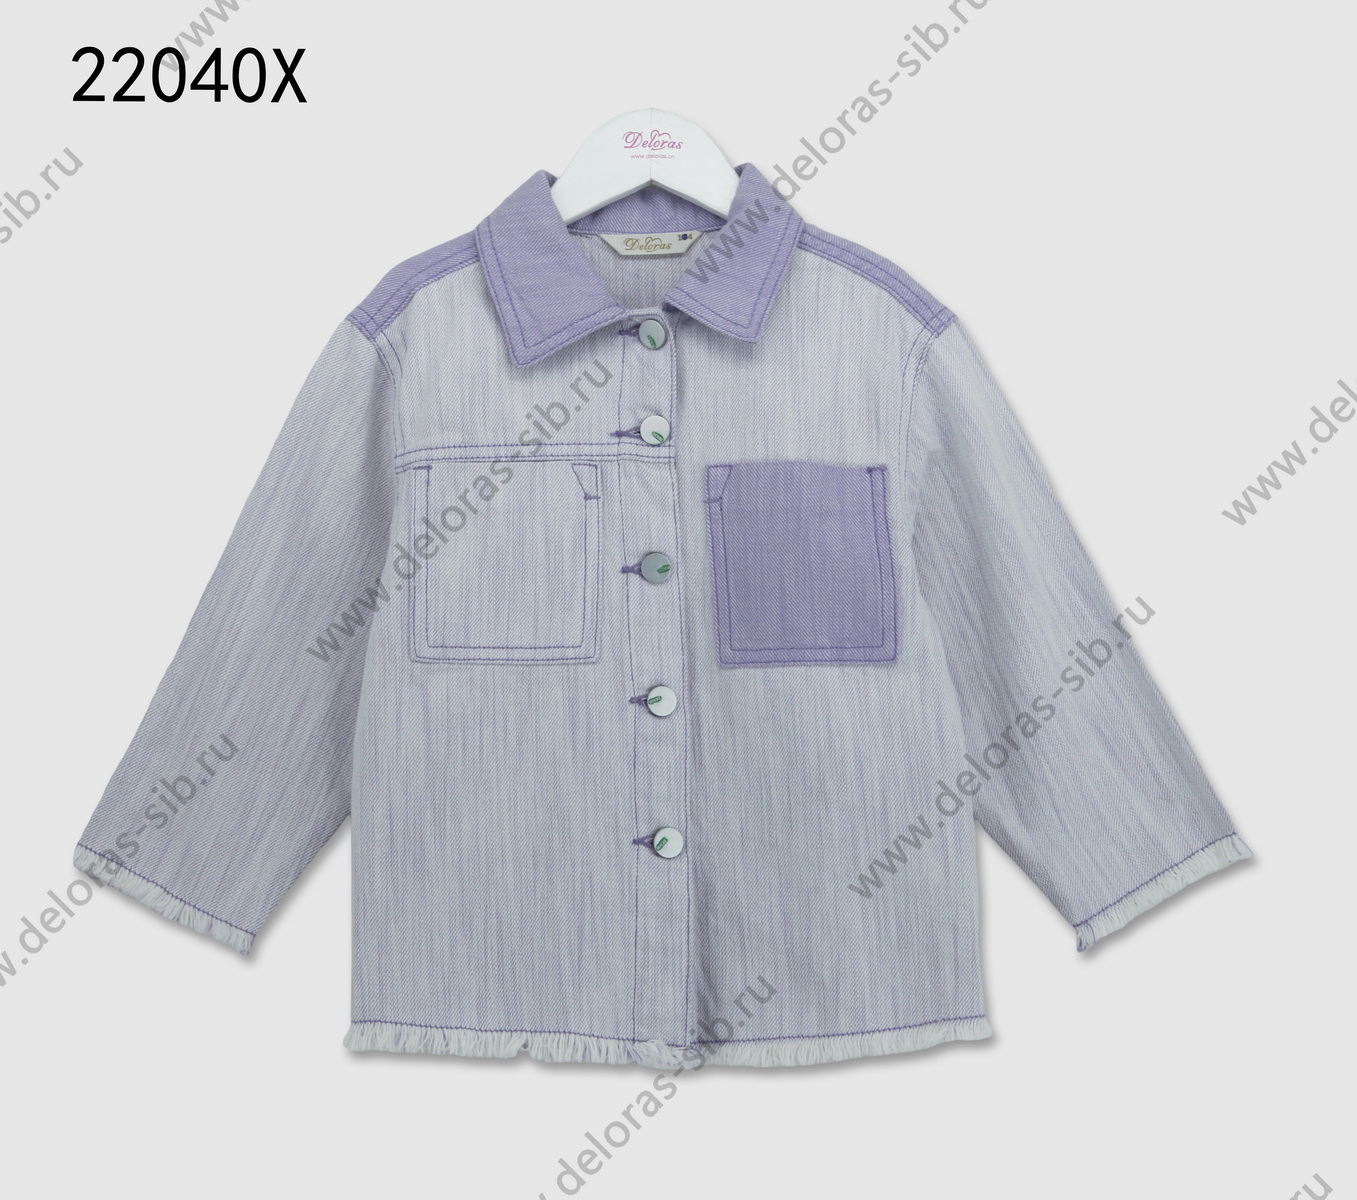 22040X Рубашка швейная д/р